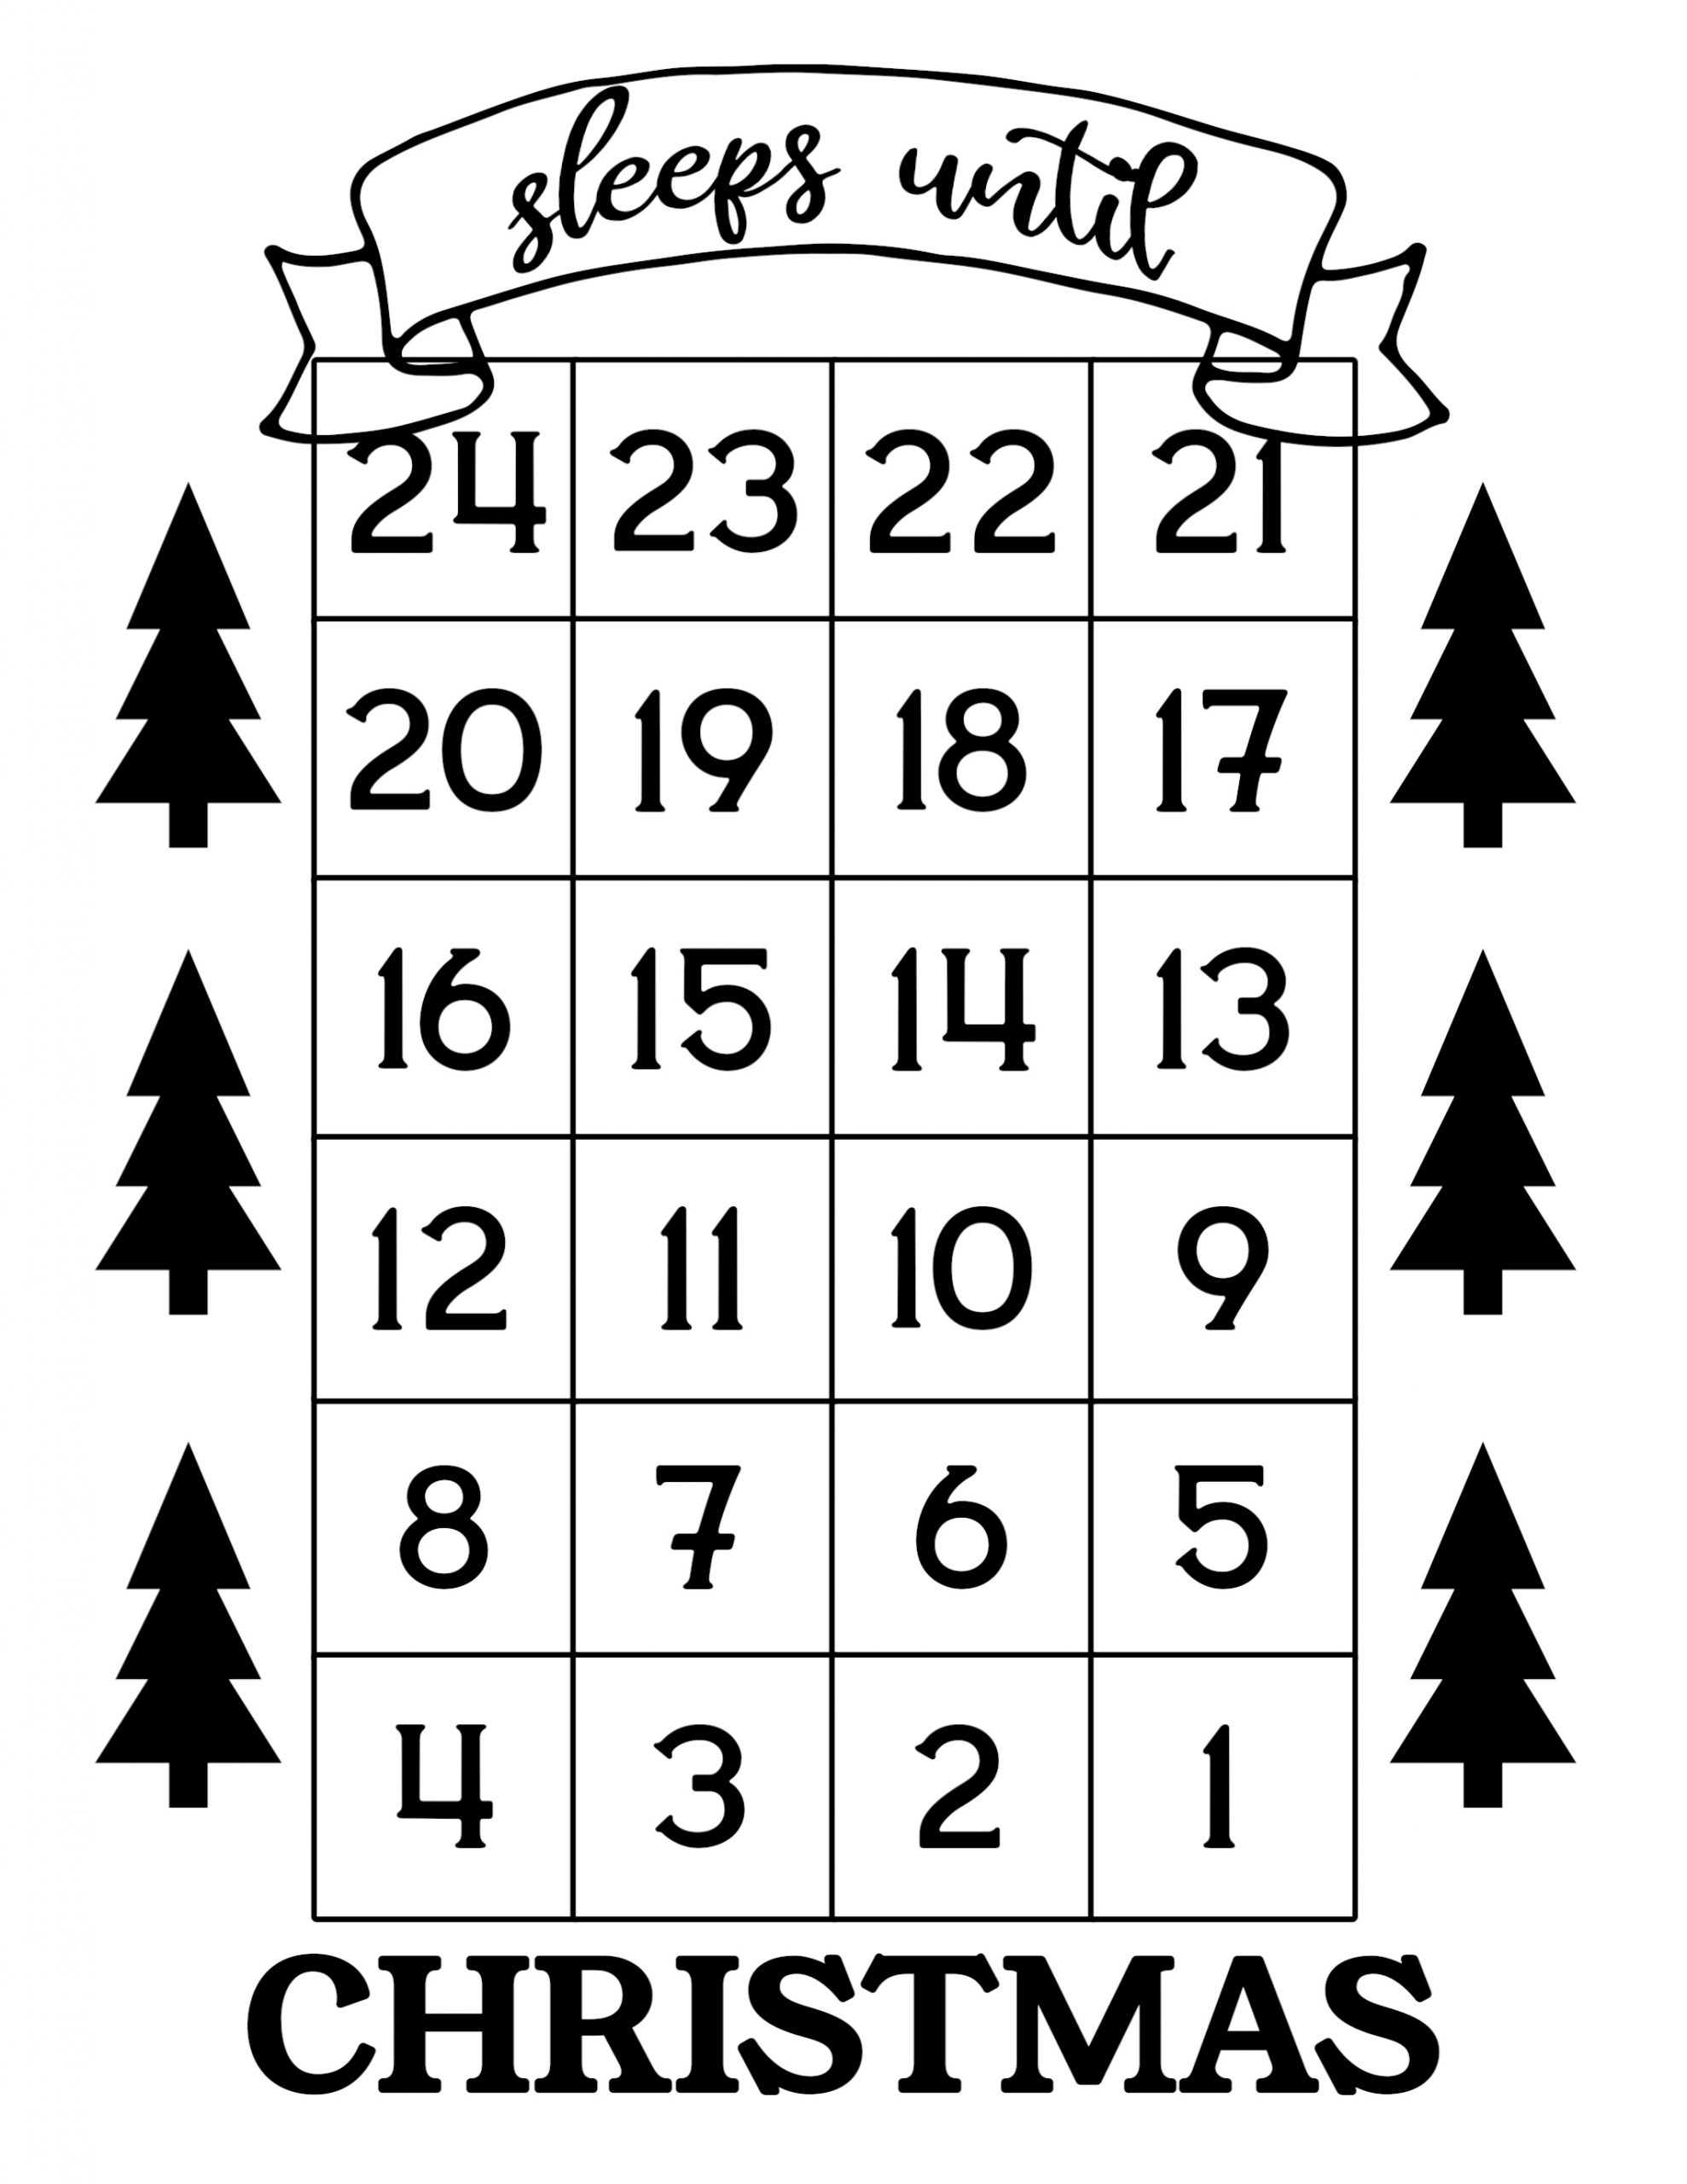 How Many Days Until Christmas Free Printable - Paper Trail Xmas Countdown 2020 Clendar Printable